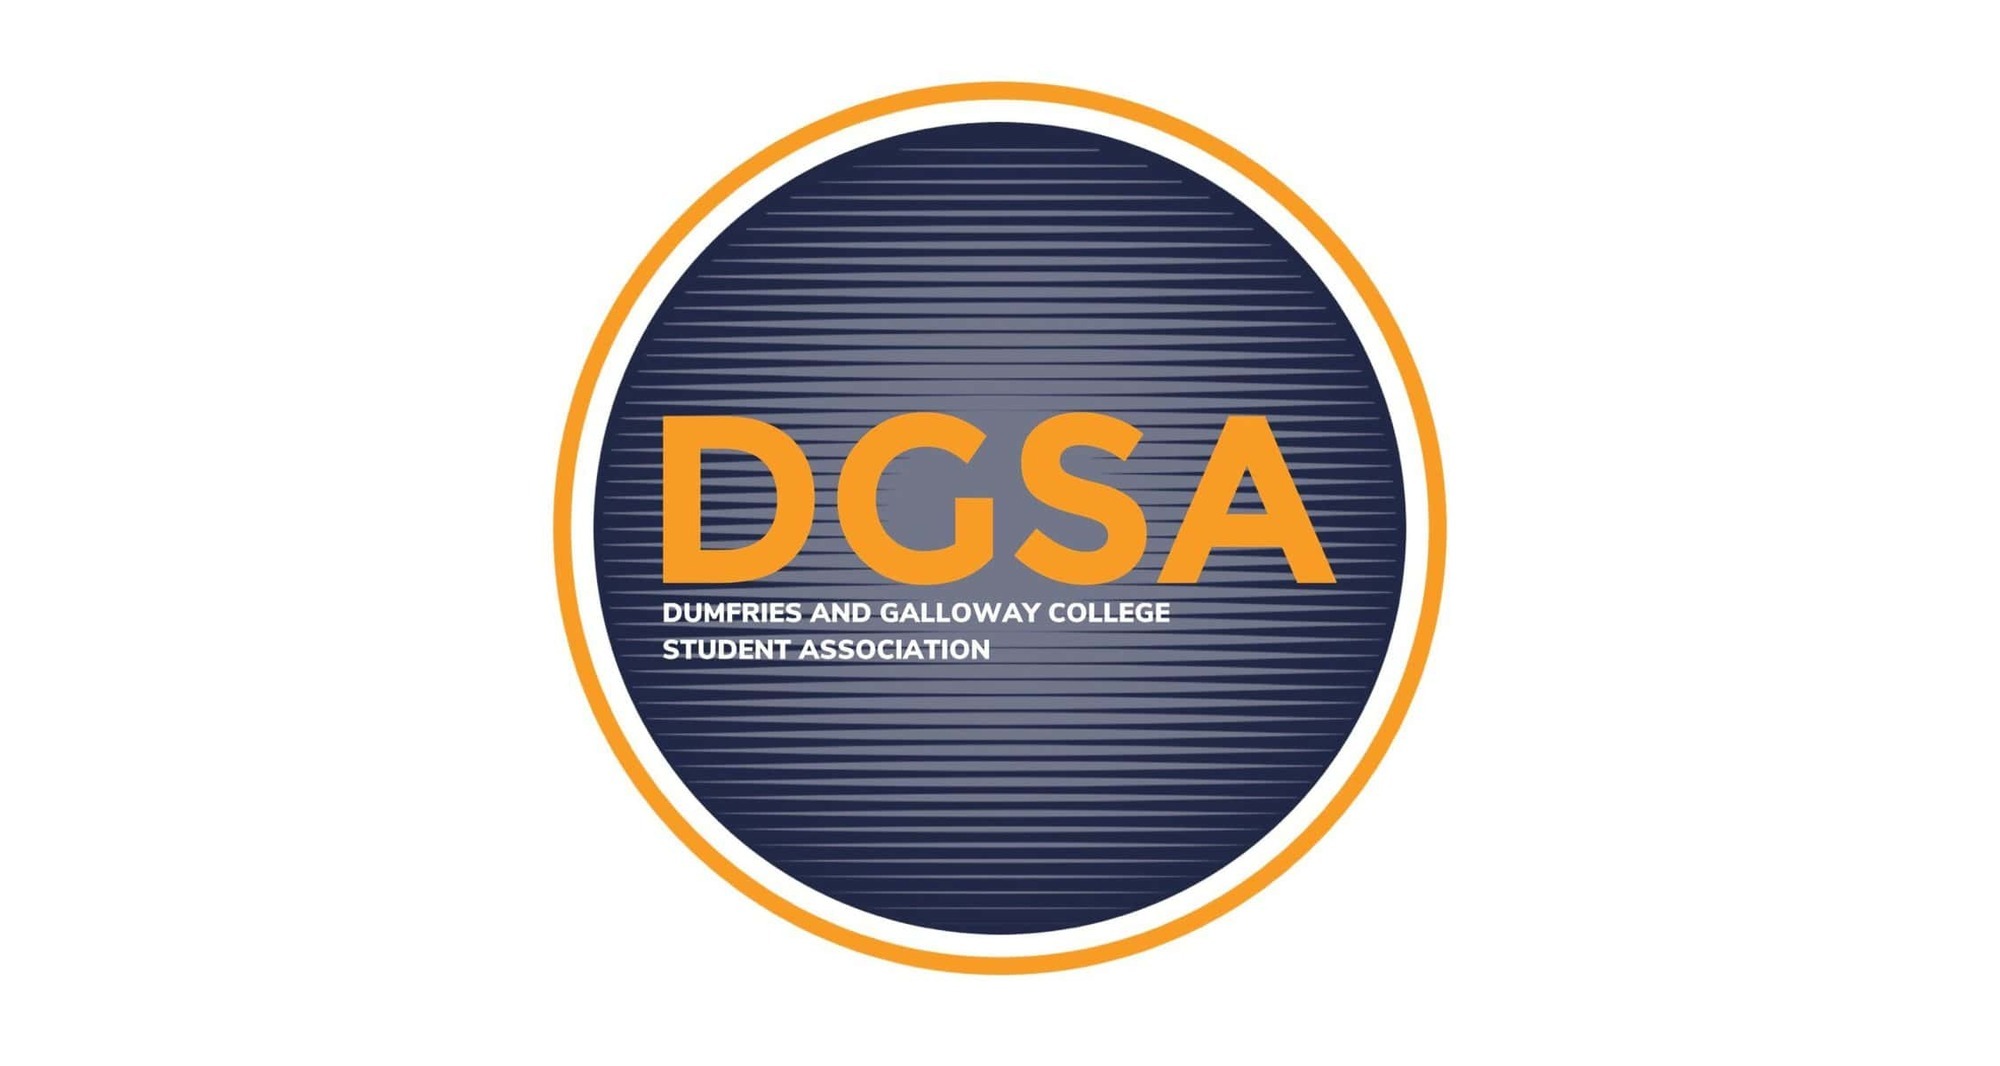 DGSA - Dumfries and Galloway College Student Association